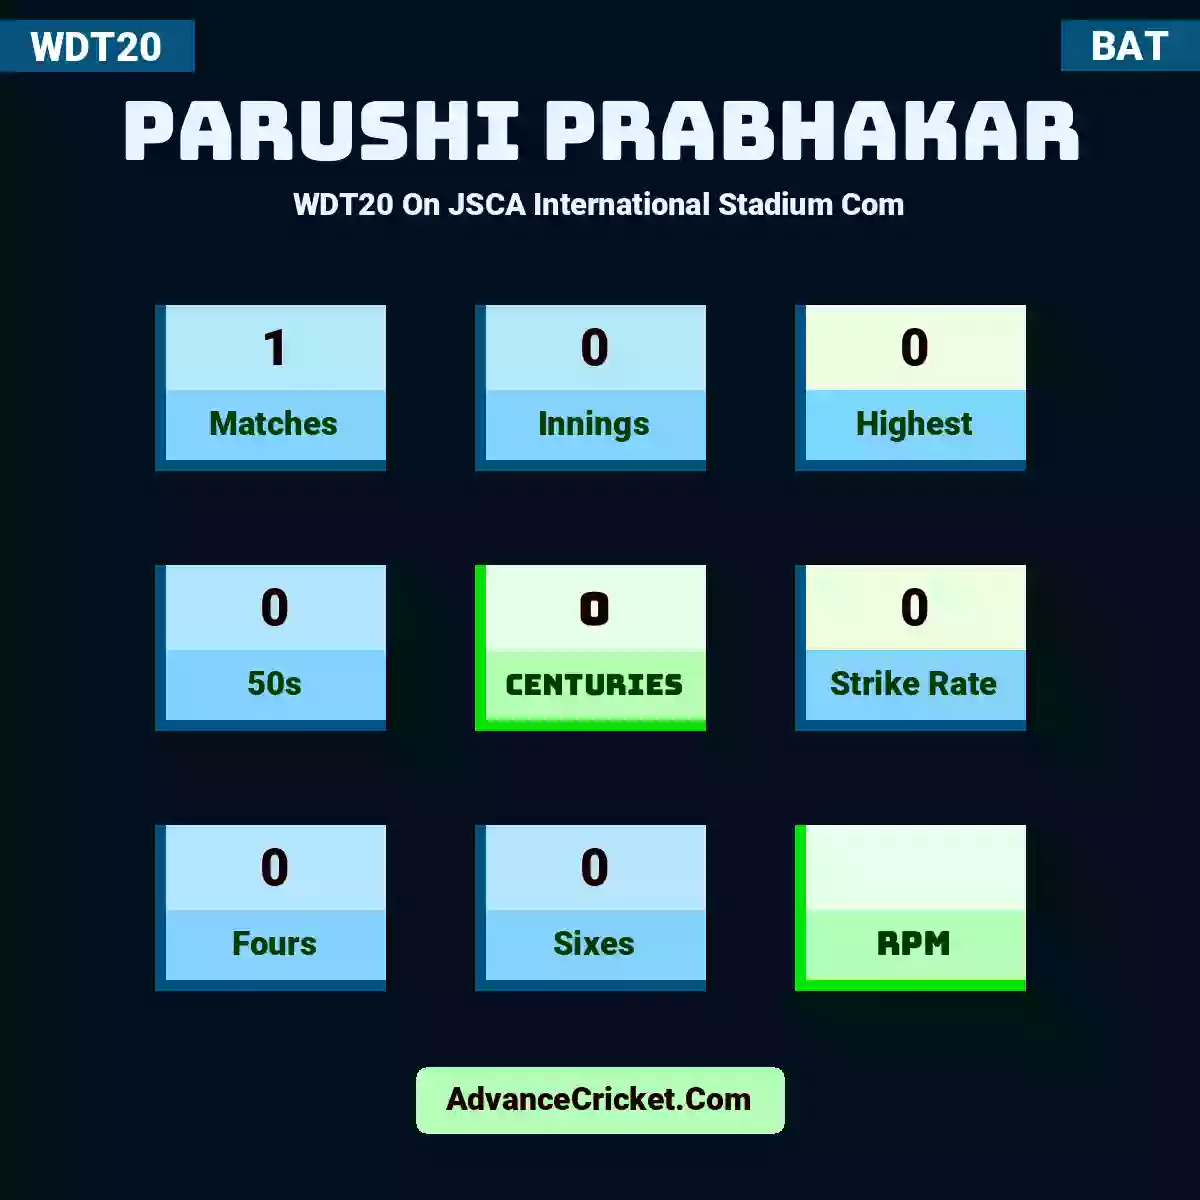 Parushi Prabhakar WDT20  On JSCA International Stadium Com, Parushi Prabhakar played 1 matches, scored 0 runs as highest, 0 half-centuries, and 0 centuries, with a strike rate of 0. P.Prabhakar hit 0 fours and 0 sixes.